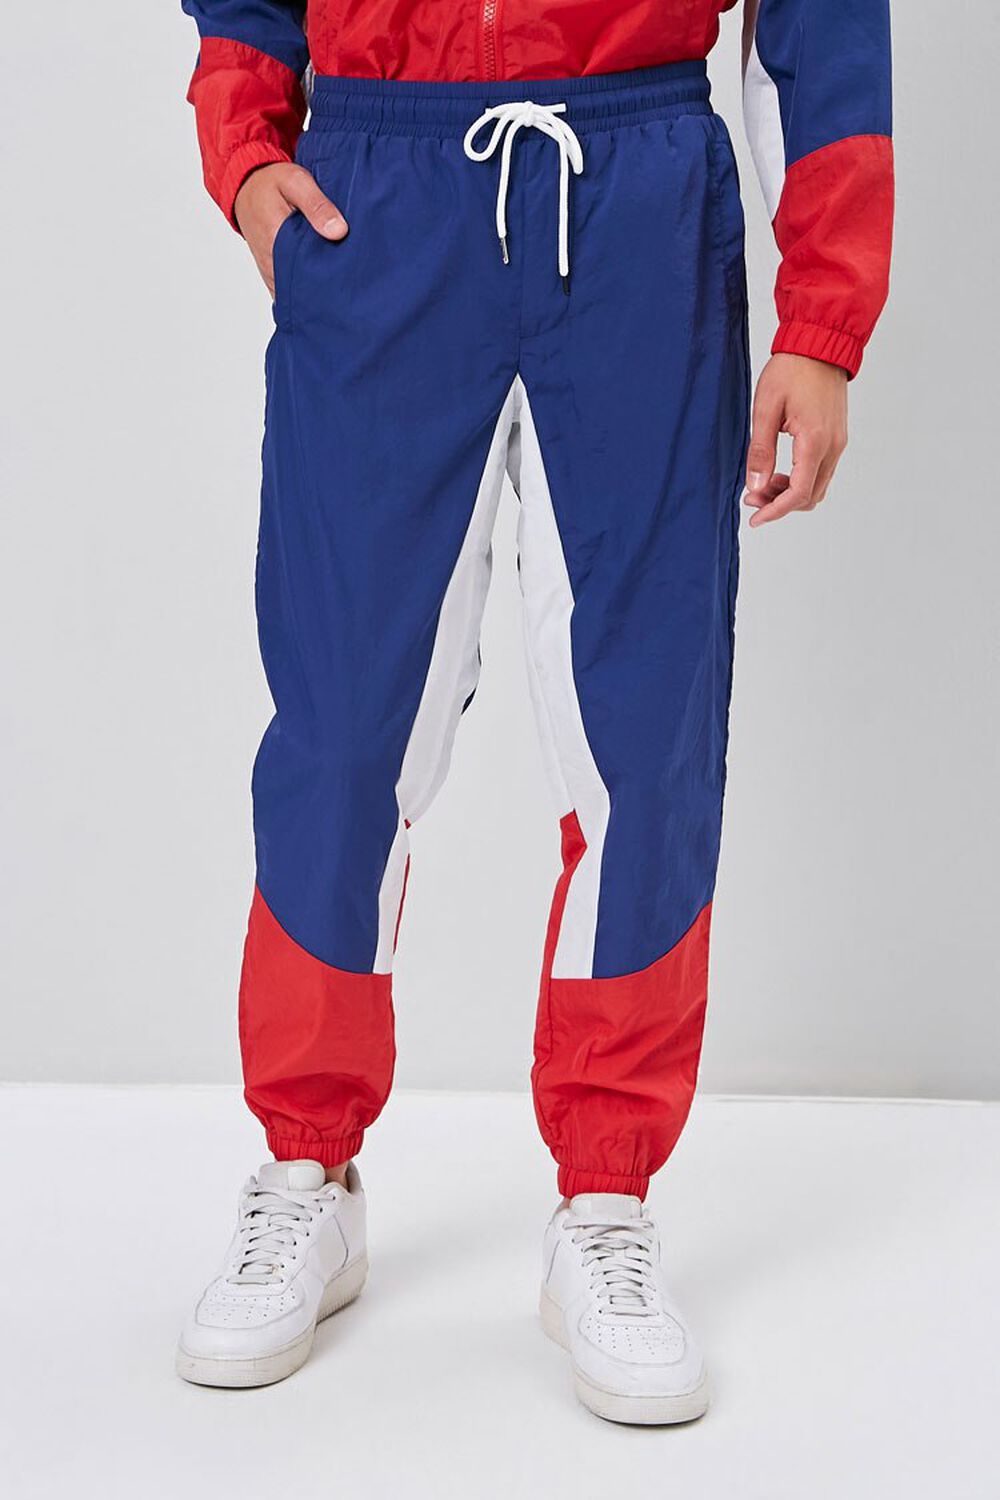 WHITE/RED Colorblock Windbreaker Pants, image 2